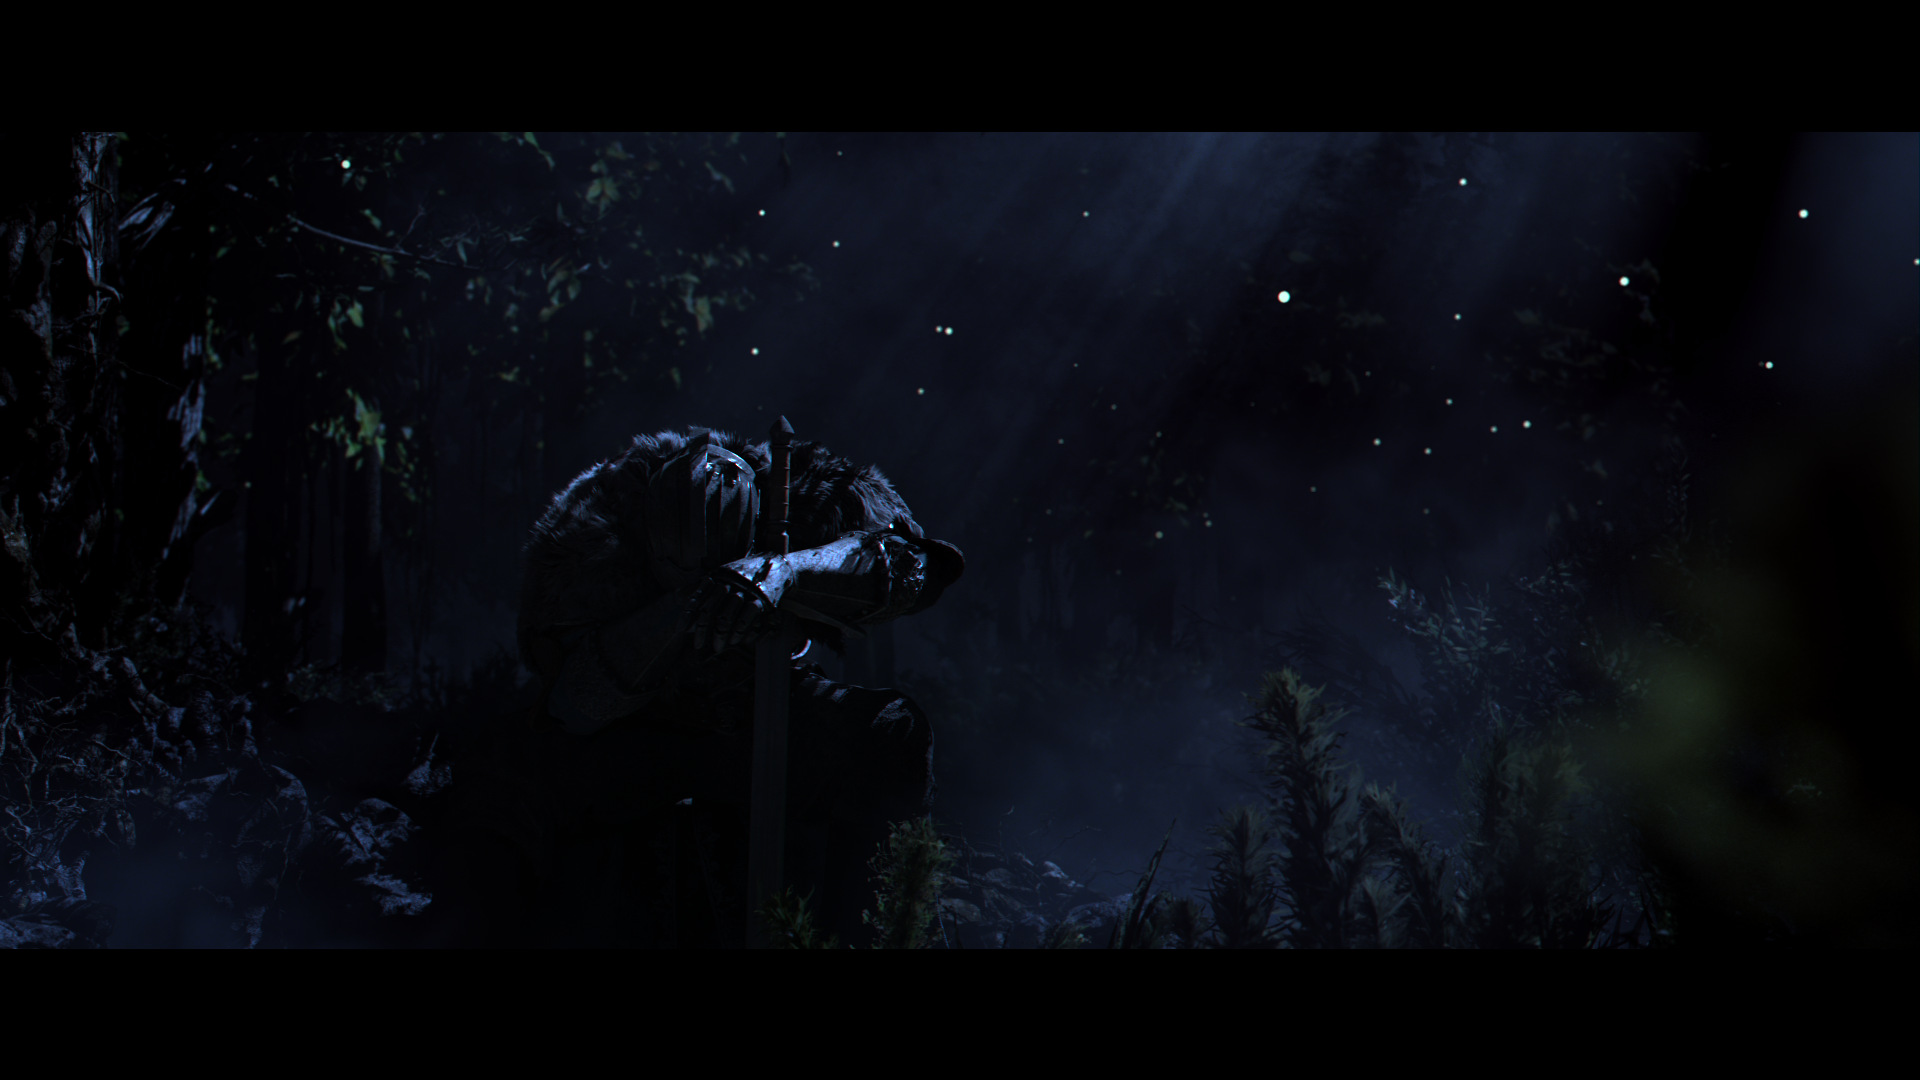 Dark Souls 2 Cinematic Still Night Scene by DarthMurda on DeviantArt